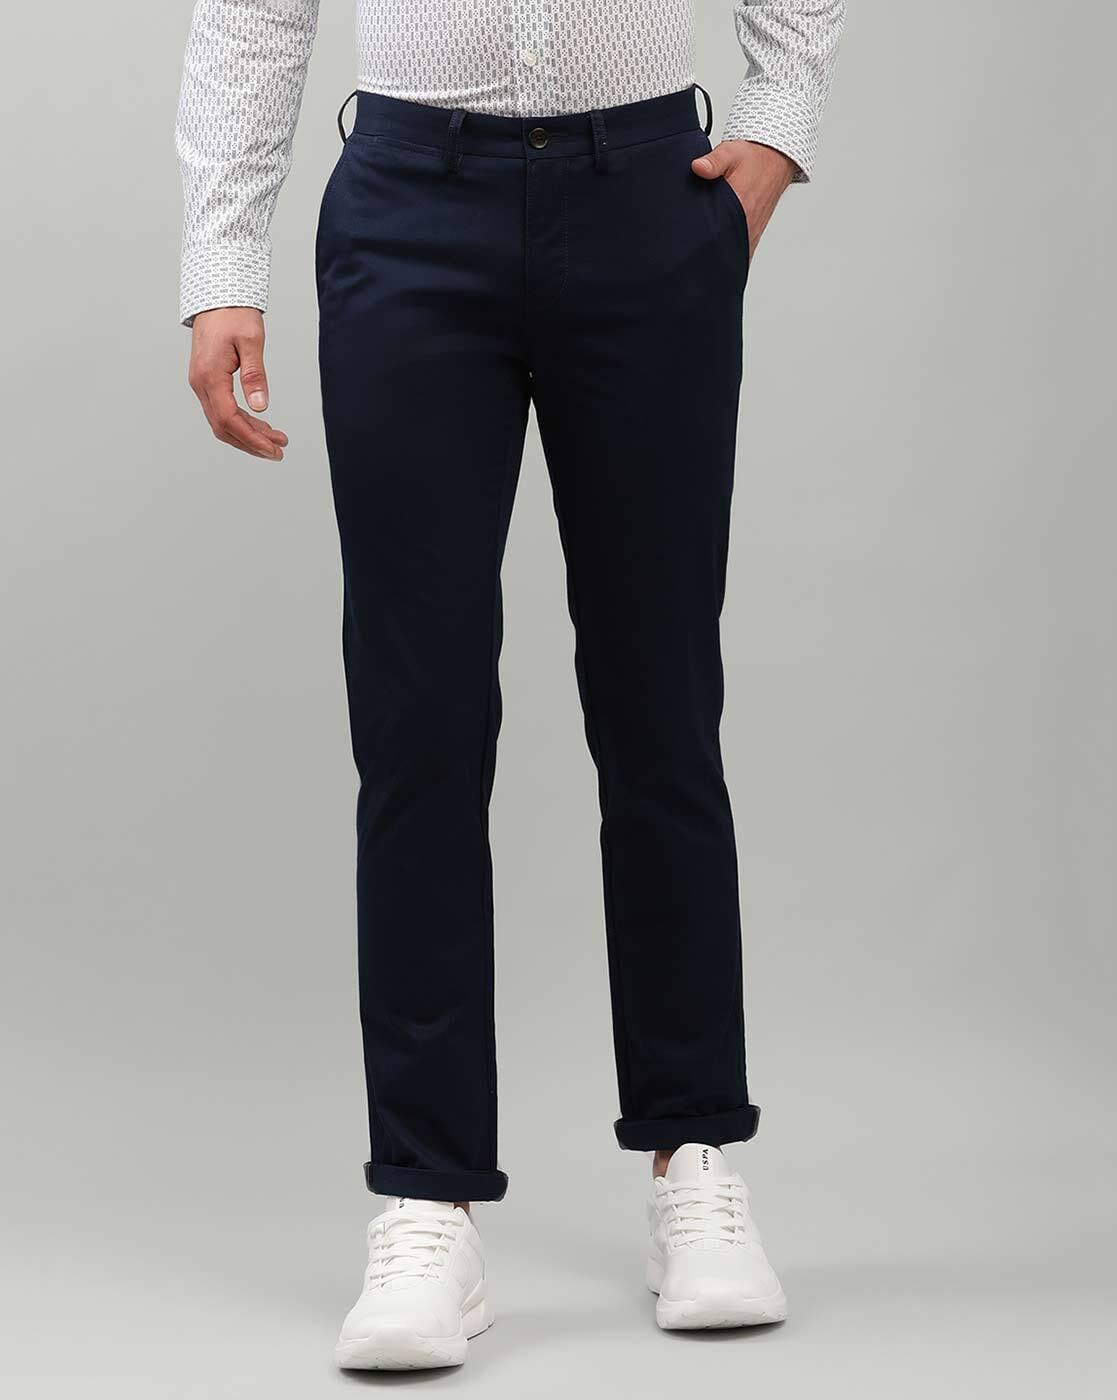 Buy Ben Sherman Trousers online  Men  27 products  FASHIOLAin